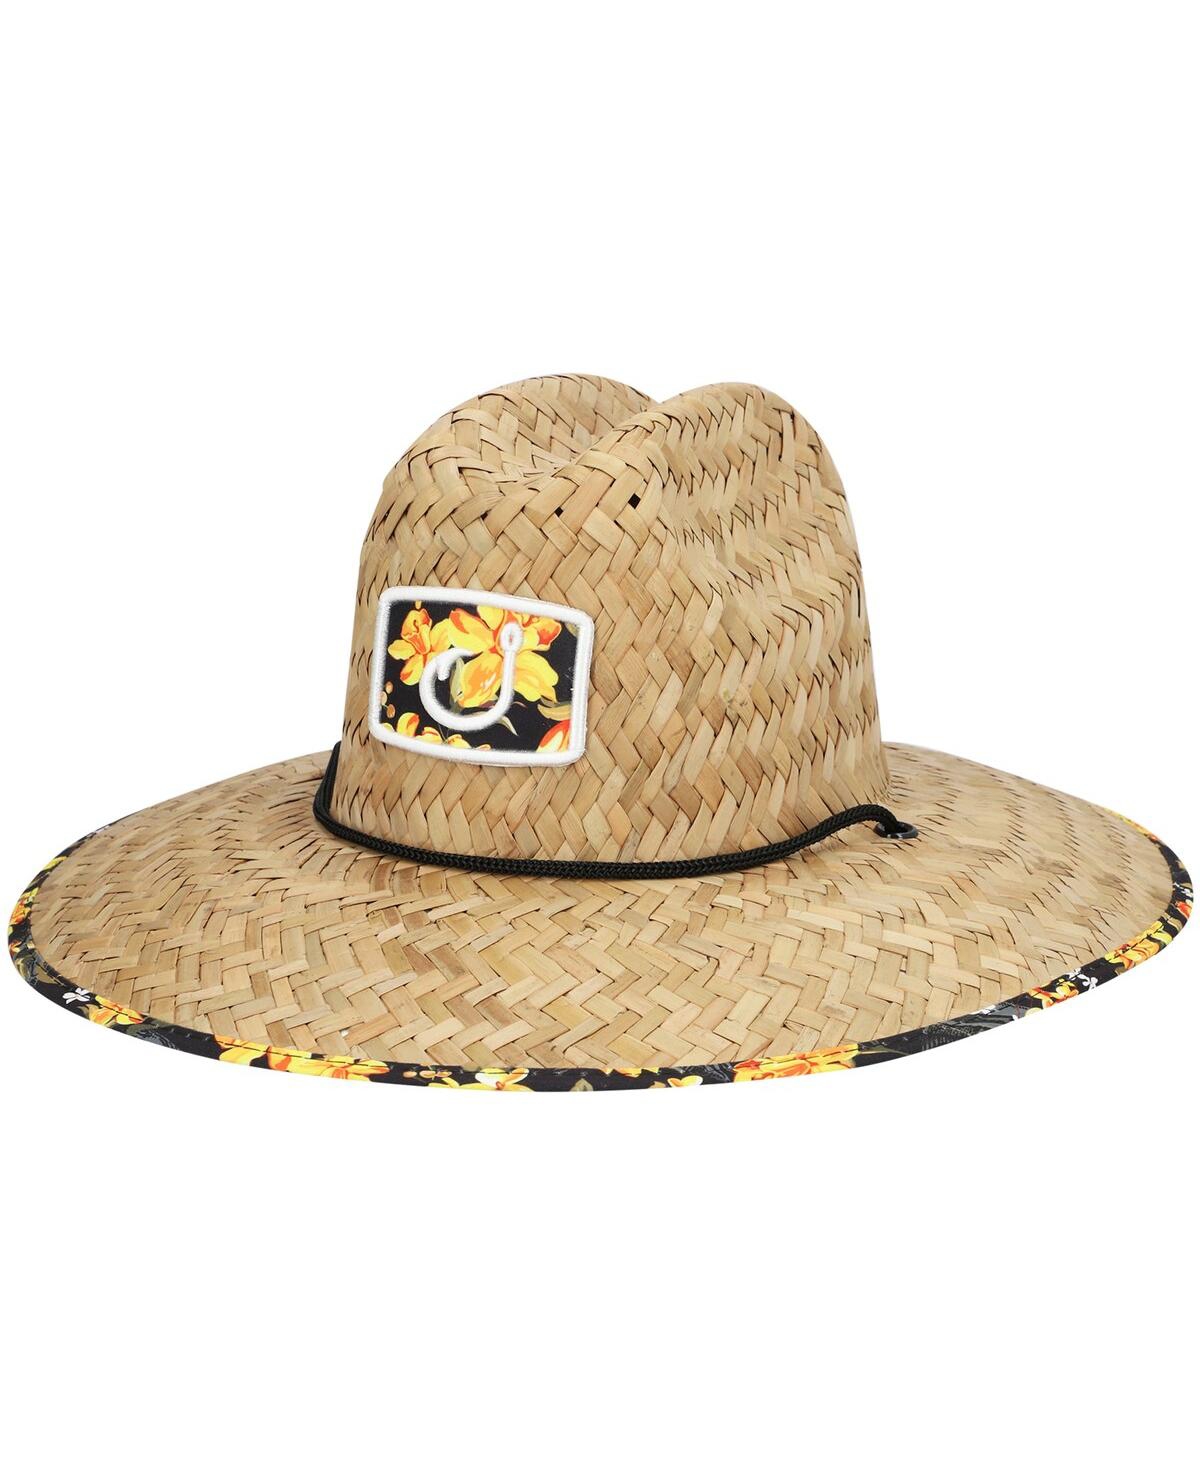 Shop Avid Men's  Natural Honeyhole Sundaze Straw Hat